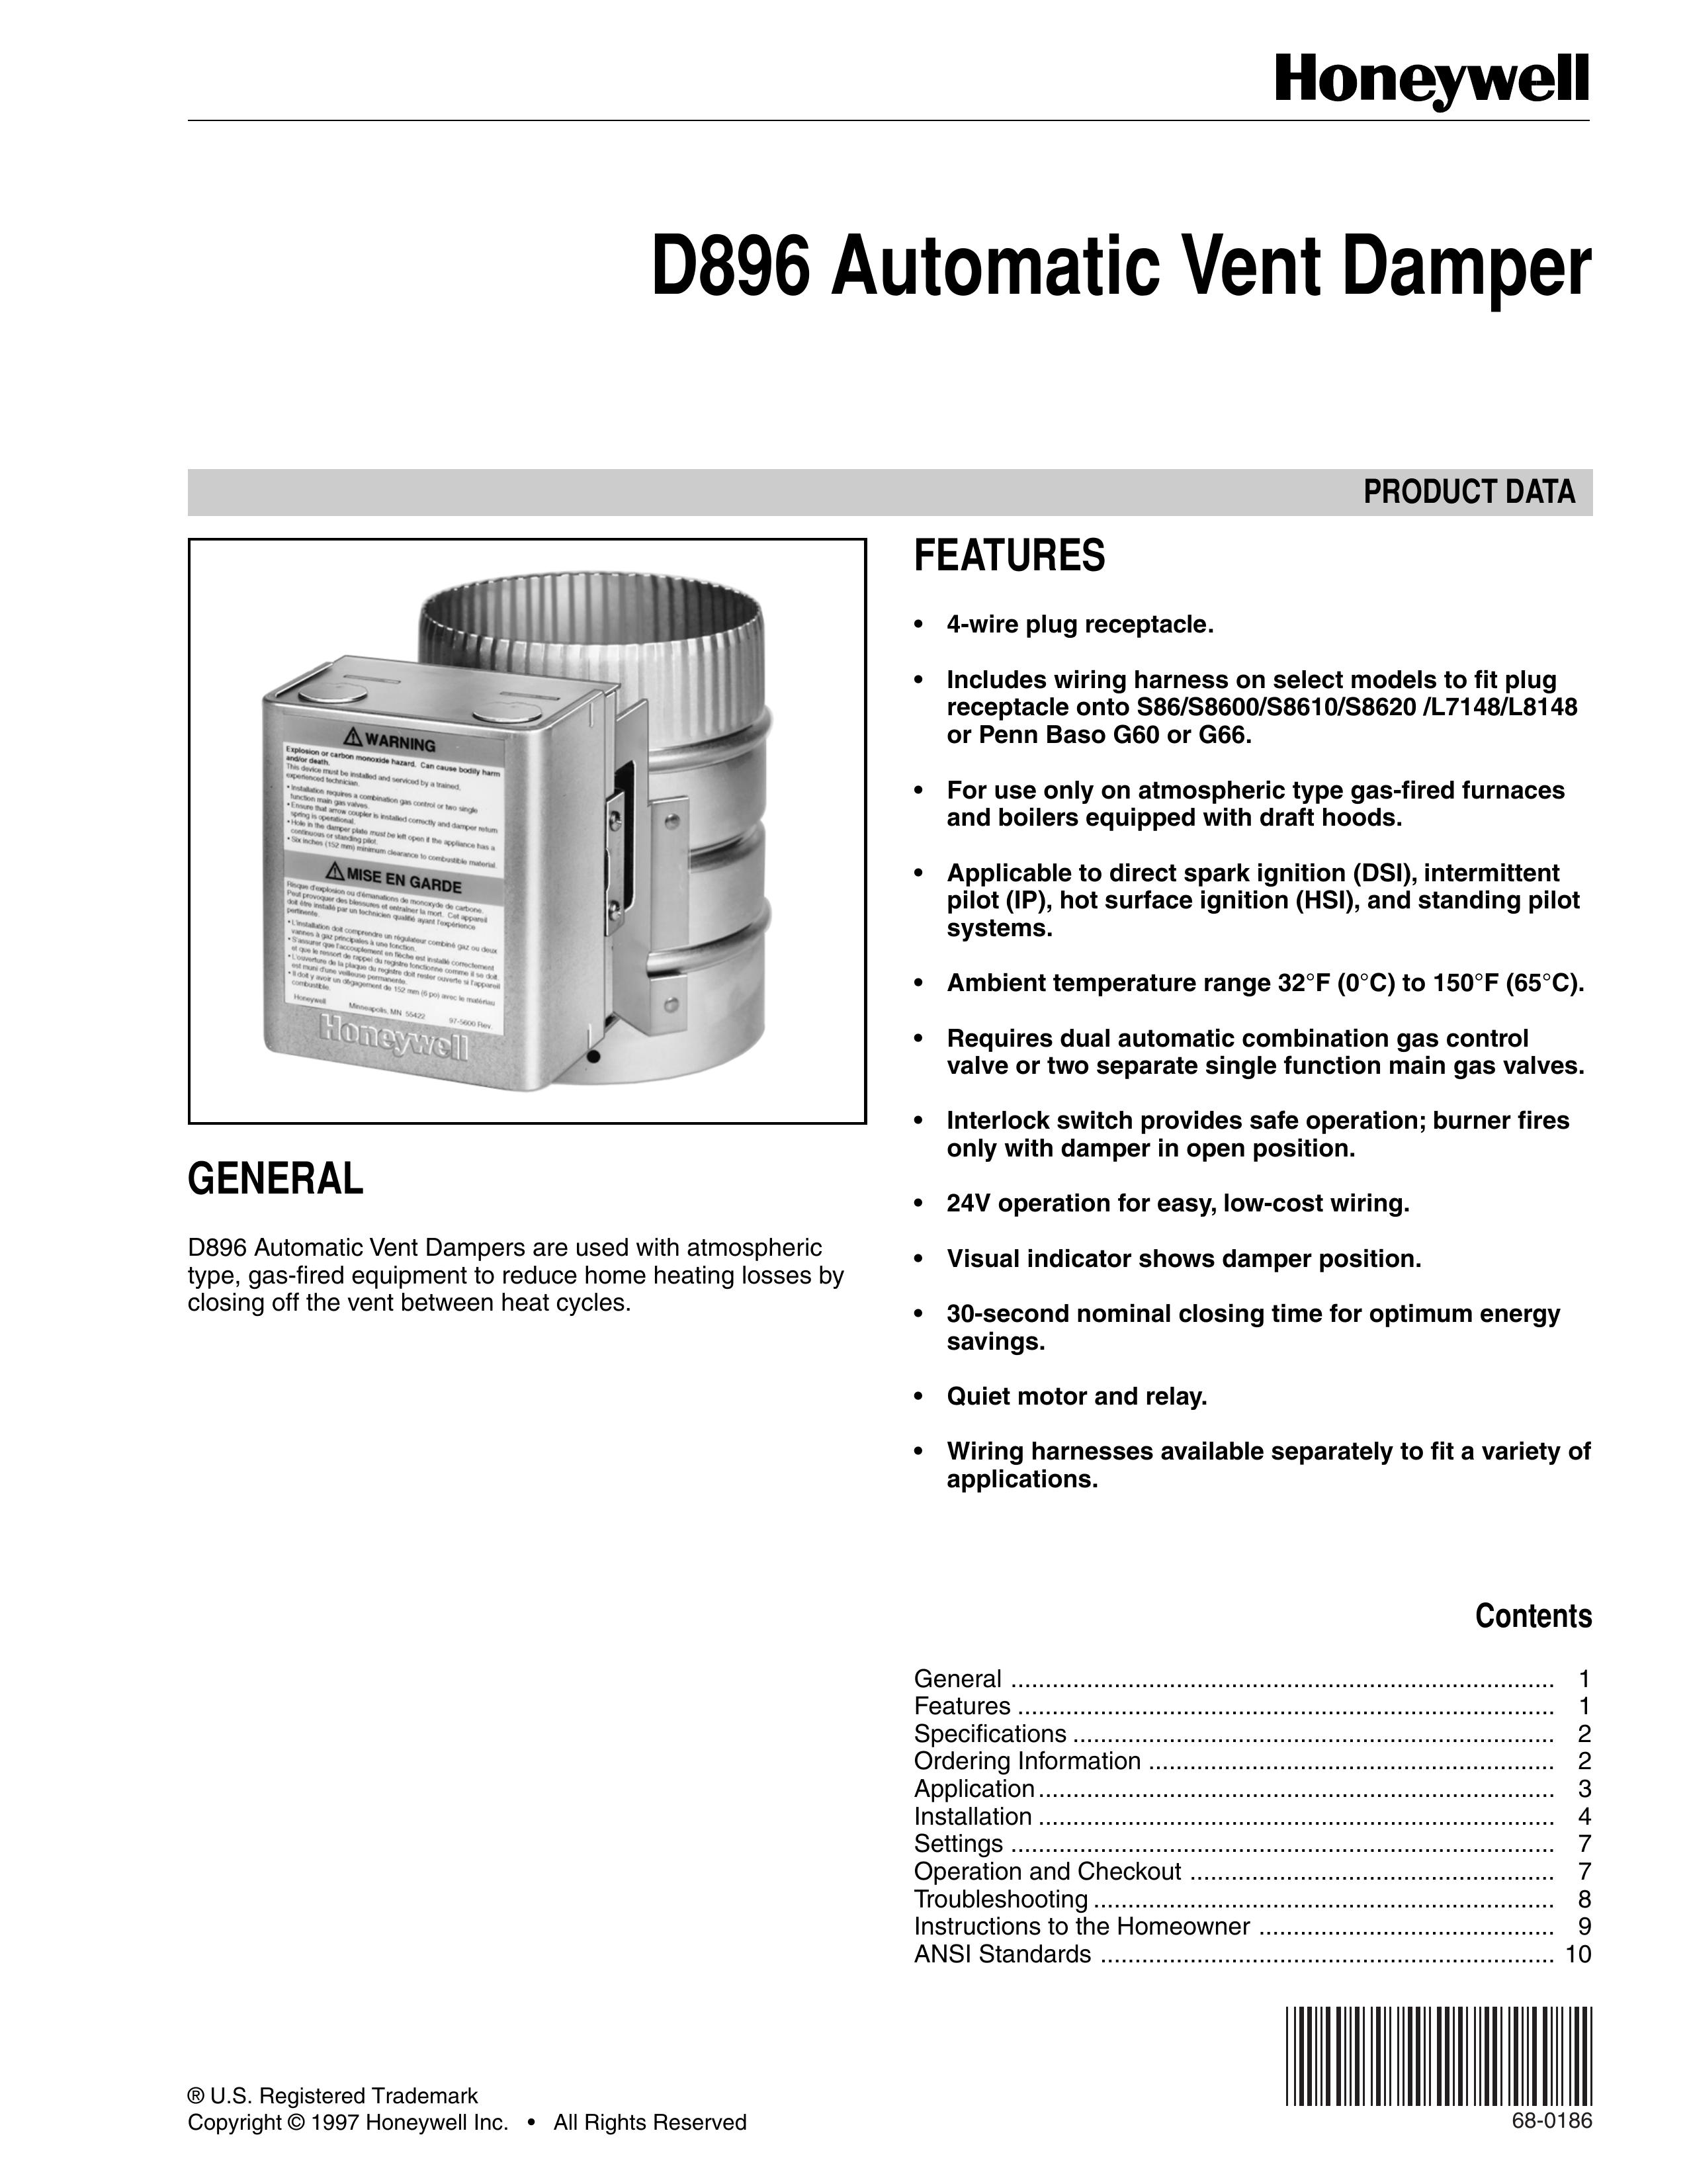 Honeywell D896 Ventilation Hood User Manual